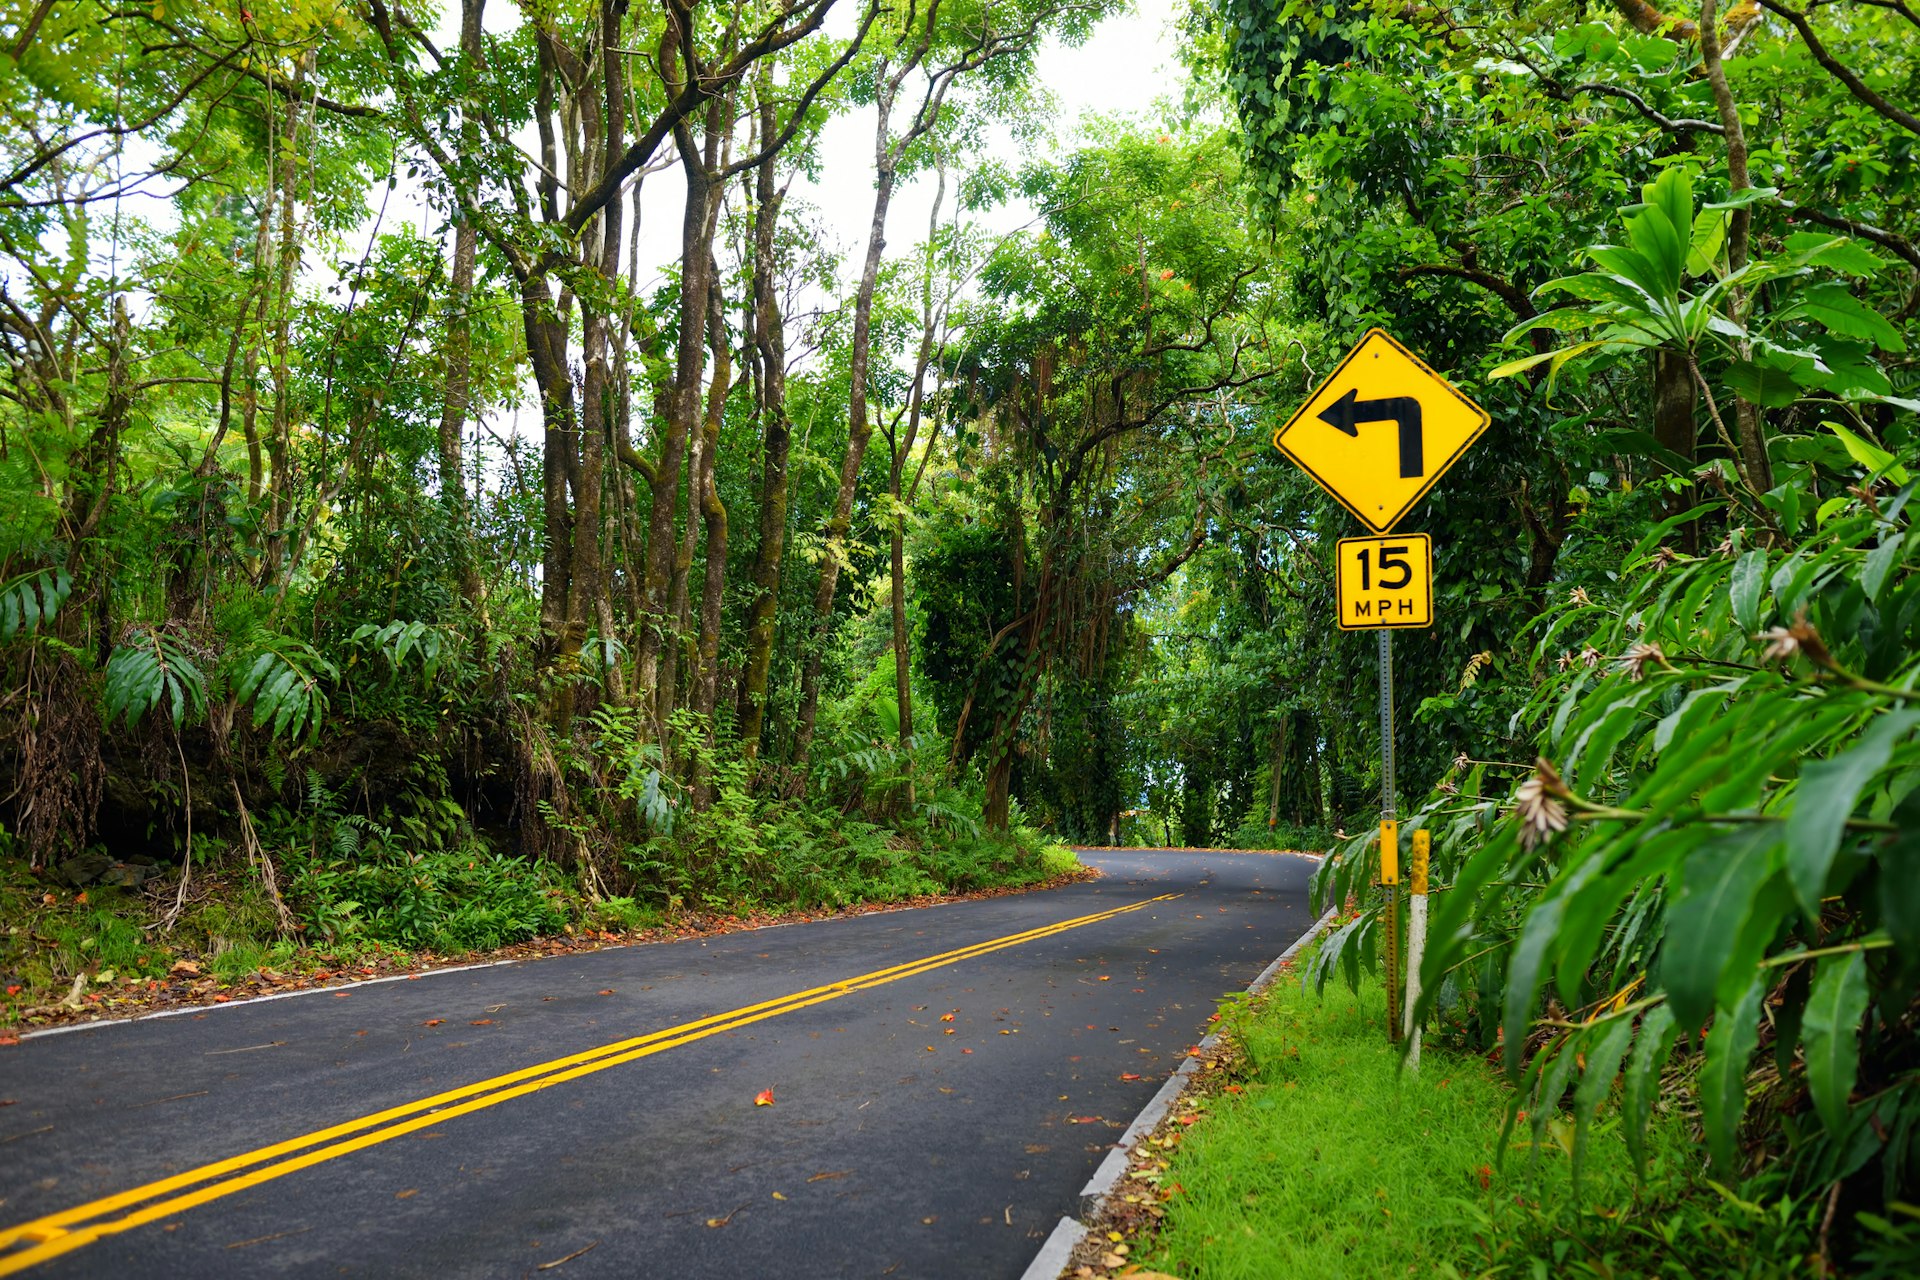 The curvy coastal road to Hana cuts through dense rainforest on the Hana Highway